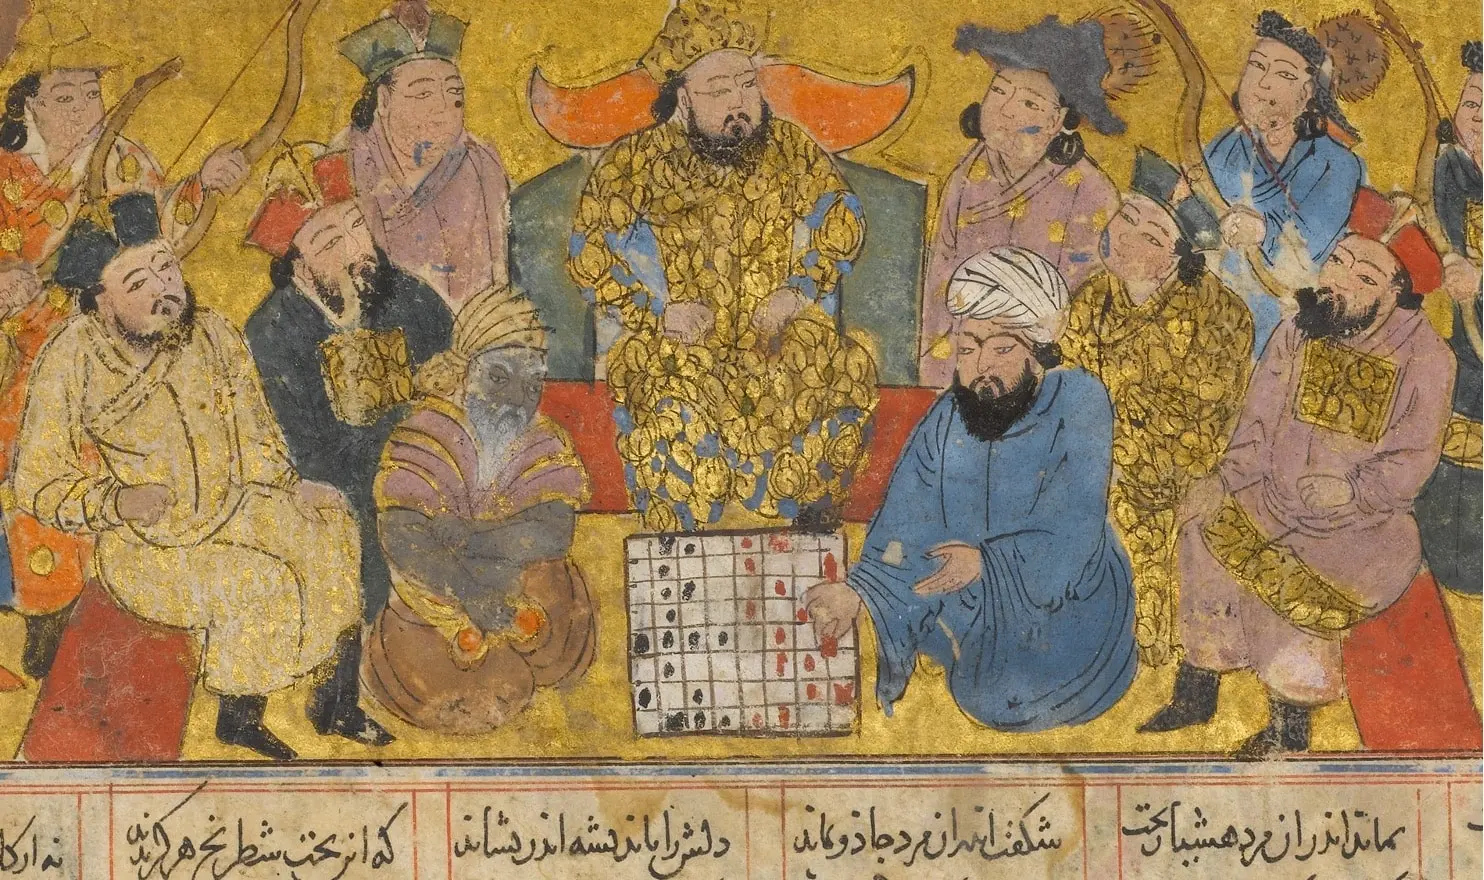 Bozorgmehr masters the game of chess